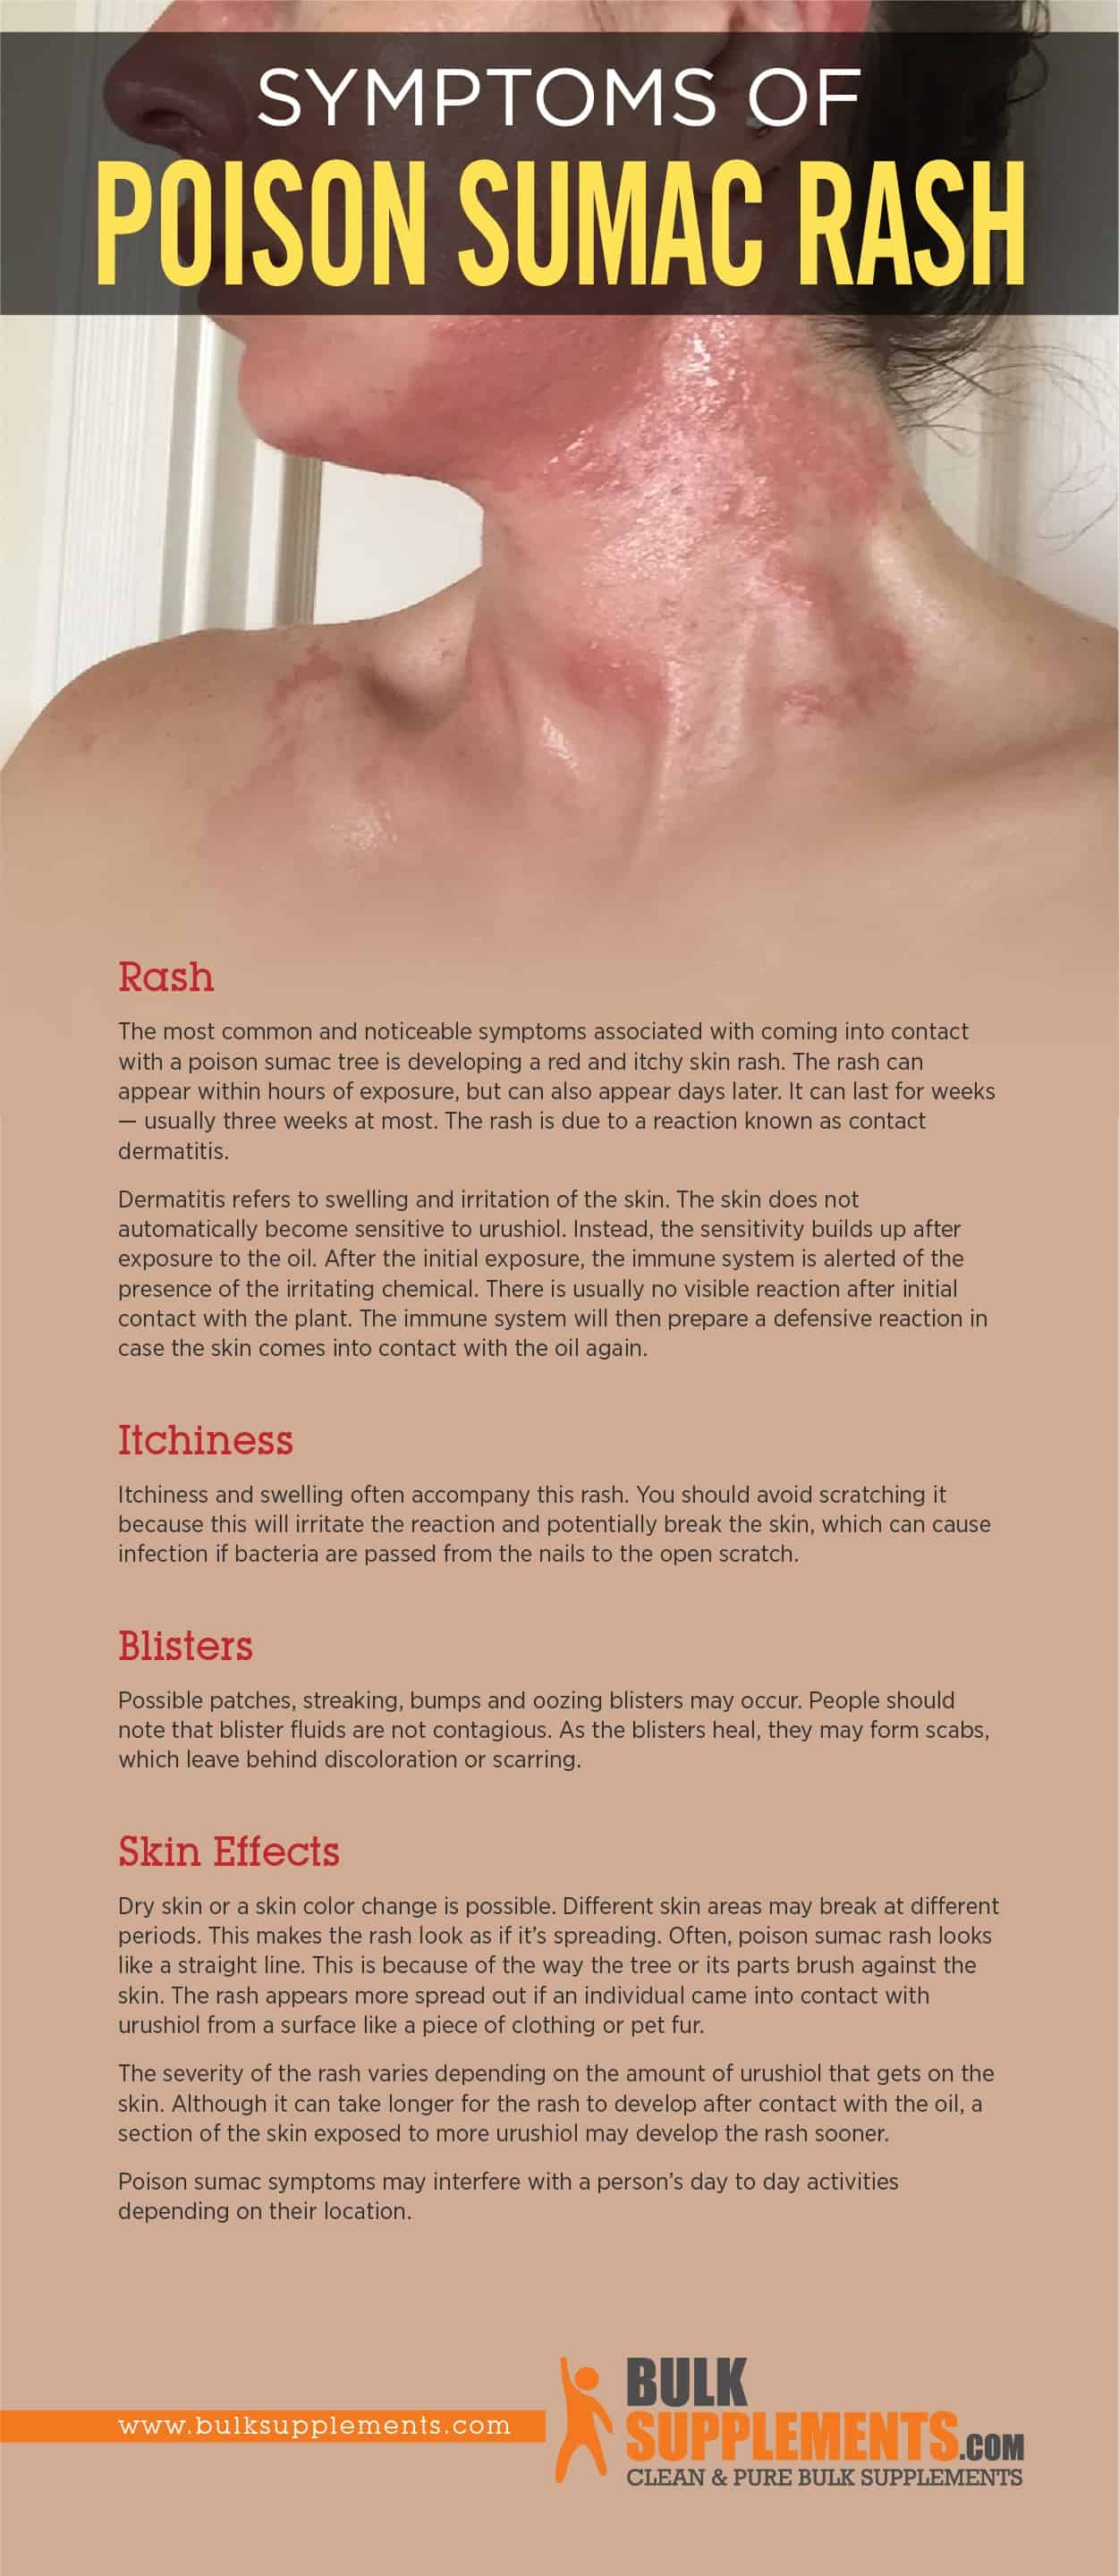 Symptoms of Poison Sumac Rash